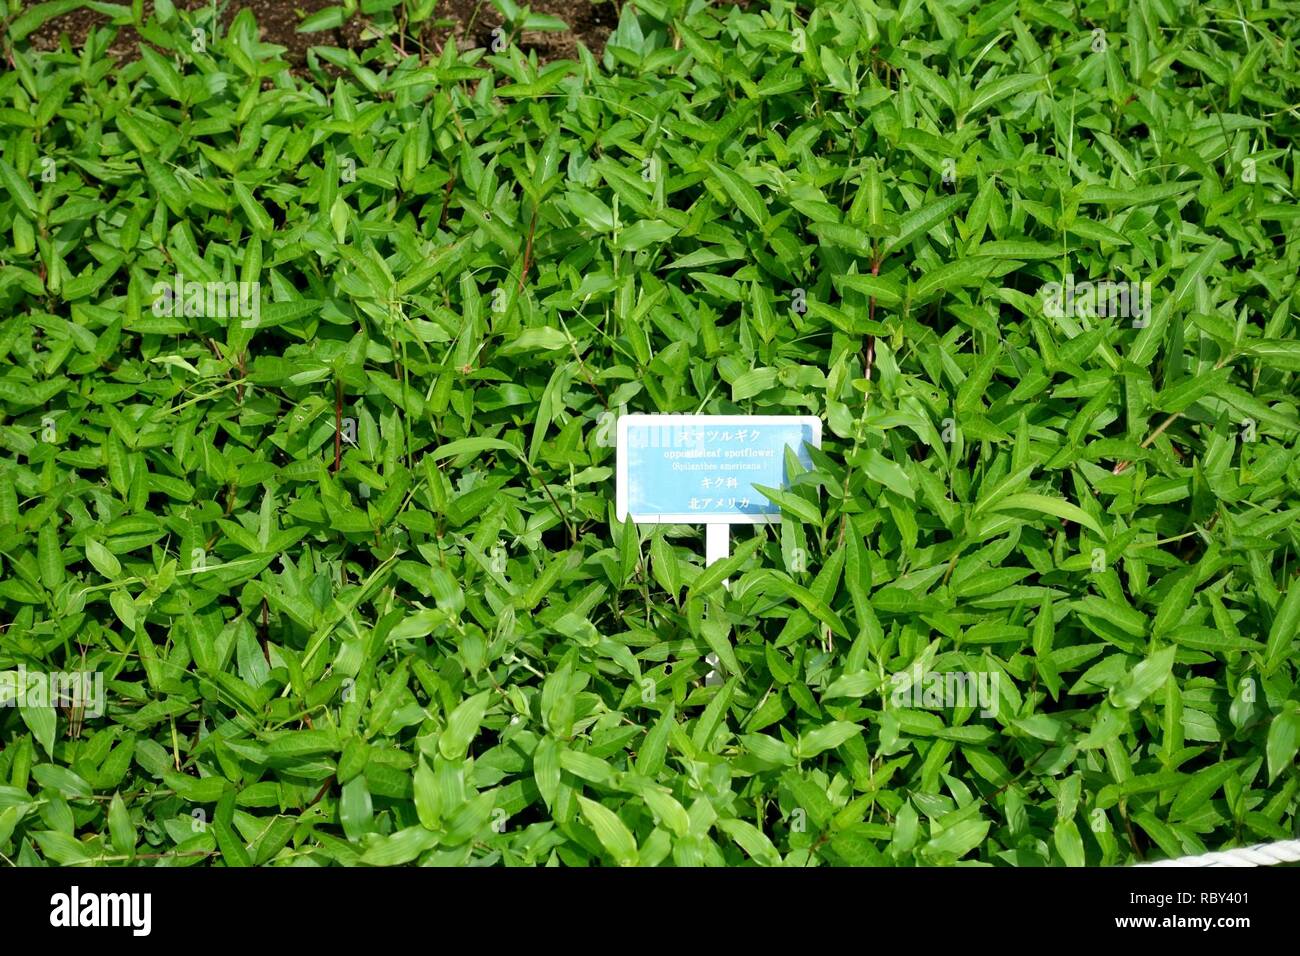 Acmella repens (Spilanthes americana) - Urban Greening Botanical Garden - Kiba Park - Koto, Tokyo, Japan - DSC05380. Stock Photo